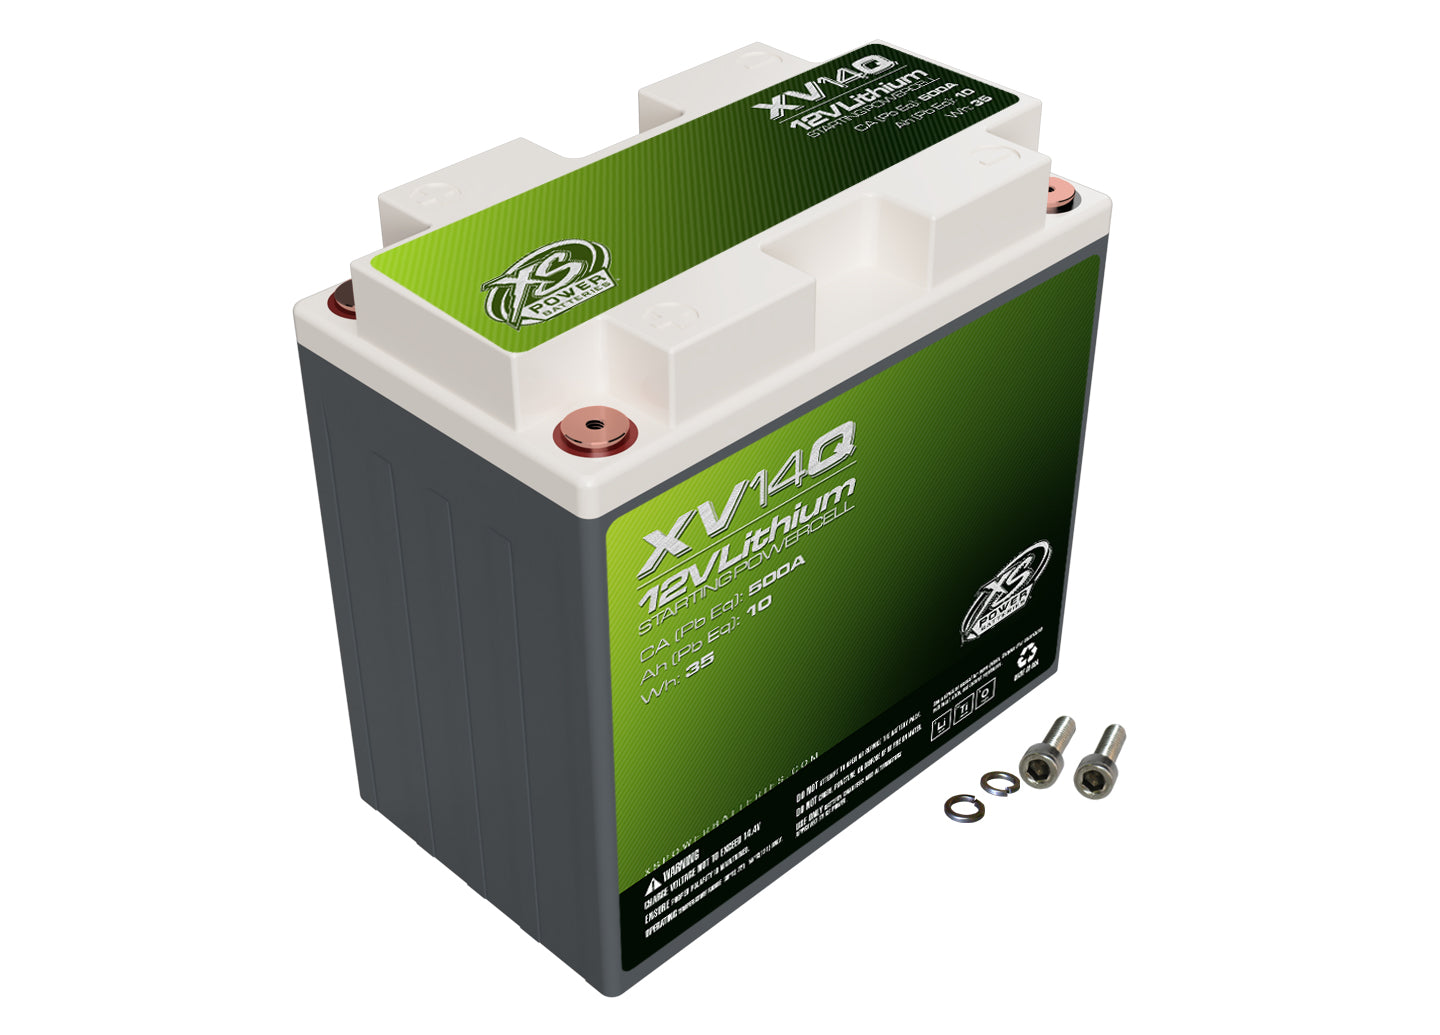 XV14Q XS Power 12VDC Group 14L Lithium LTO Underhood-Safe Vehicle Battery 750W 35Wh